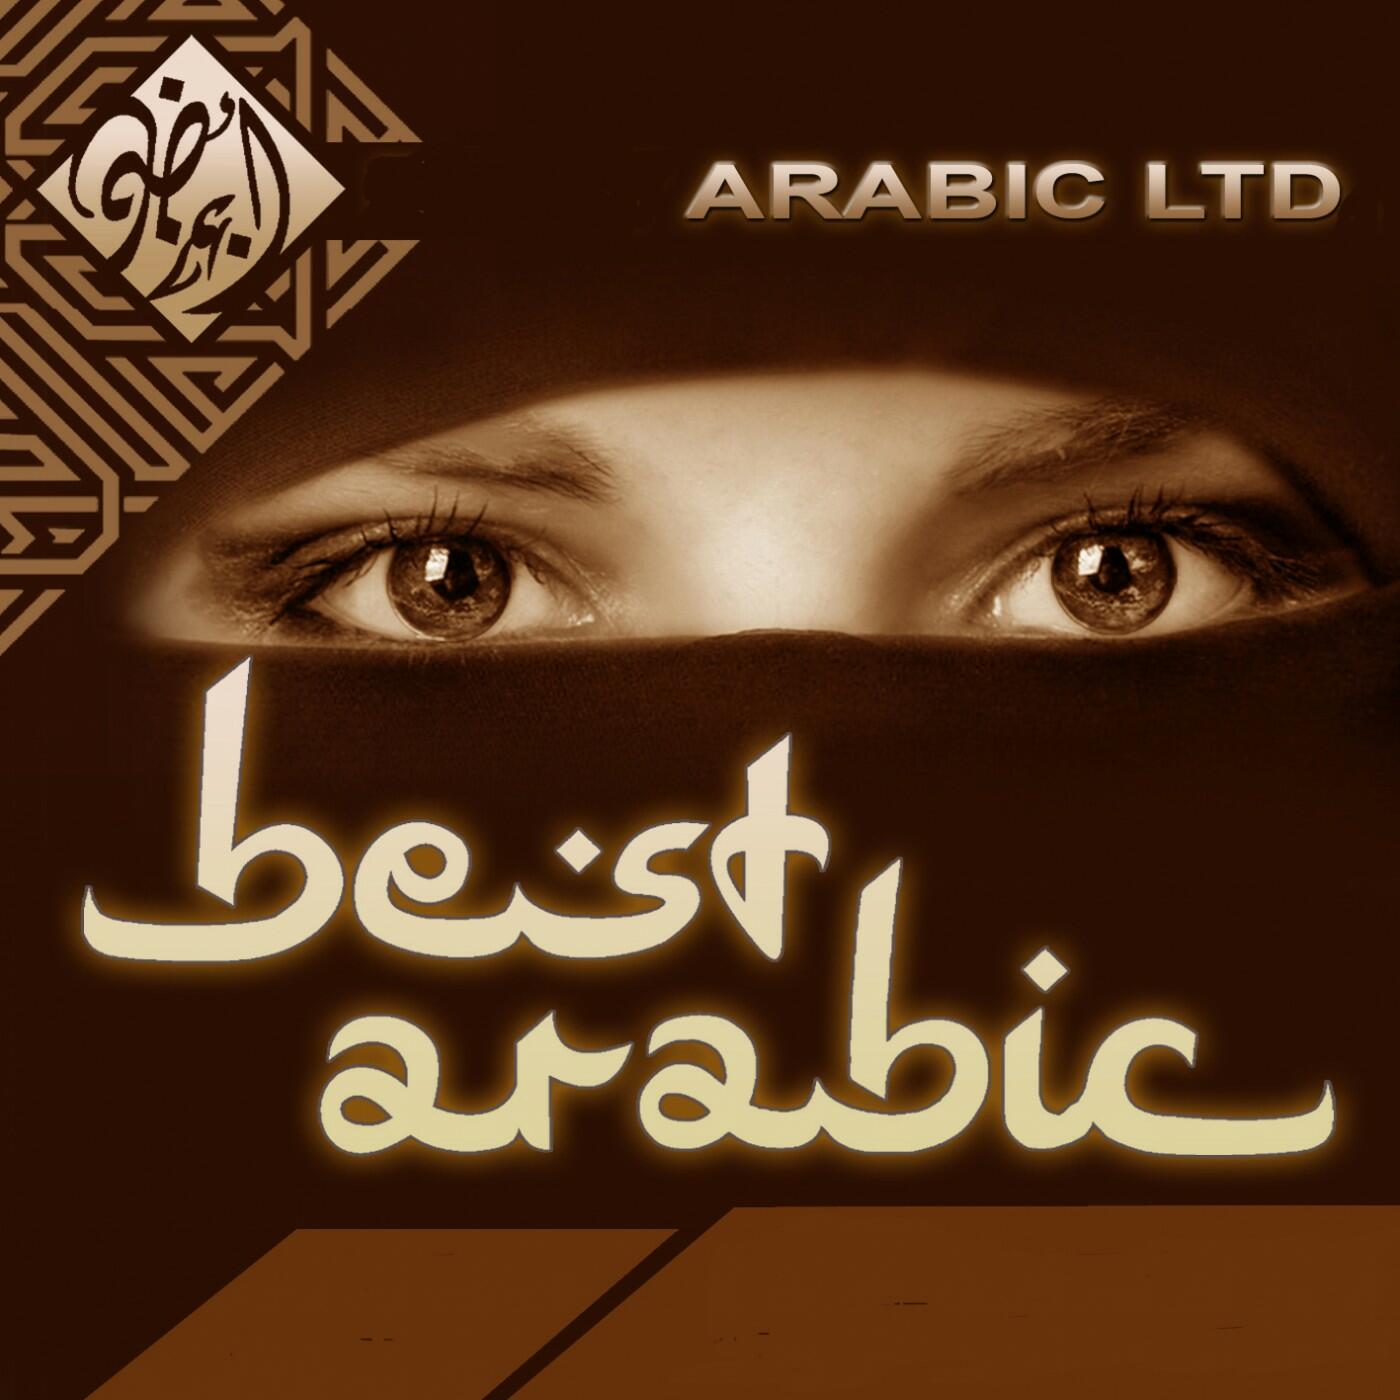 Arabic Ltd. Best Arabic iHeart